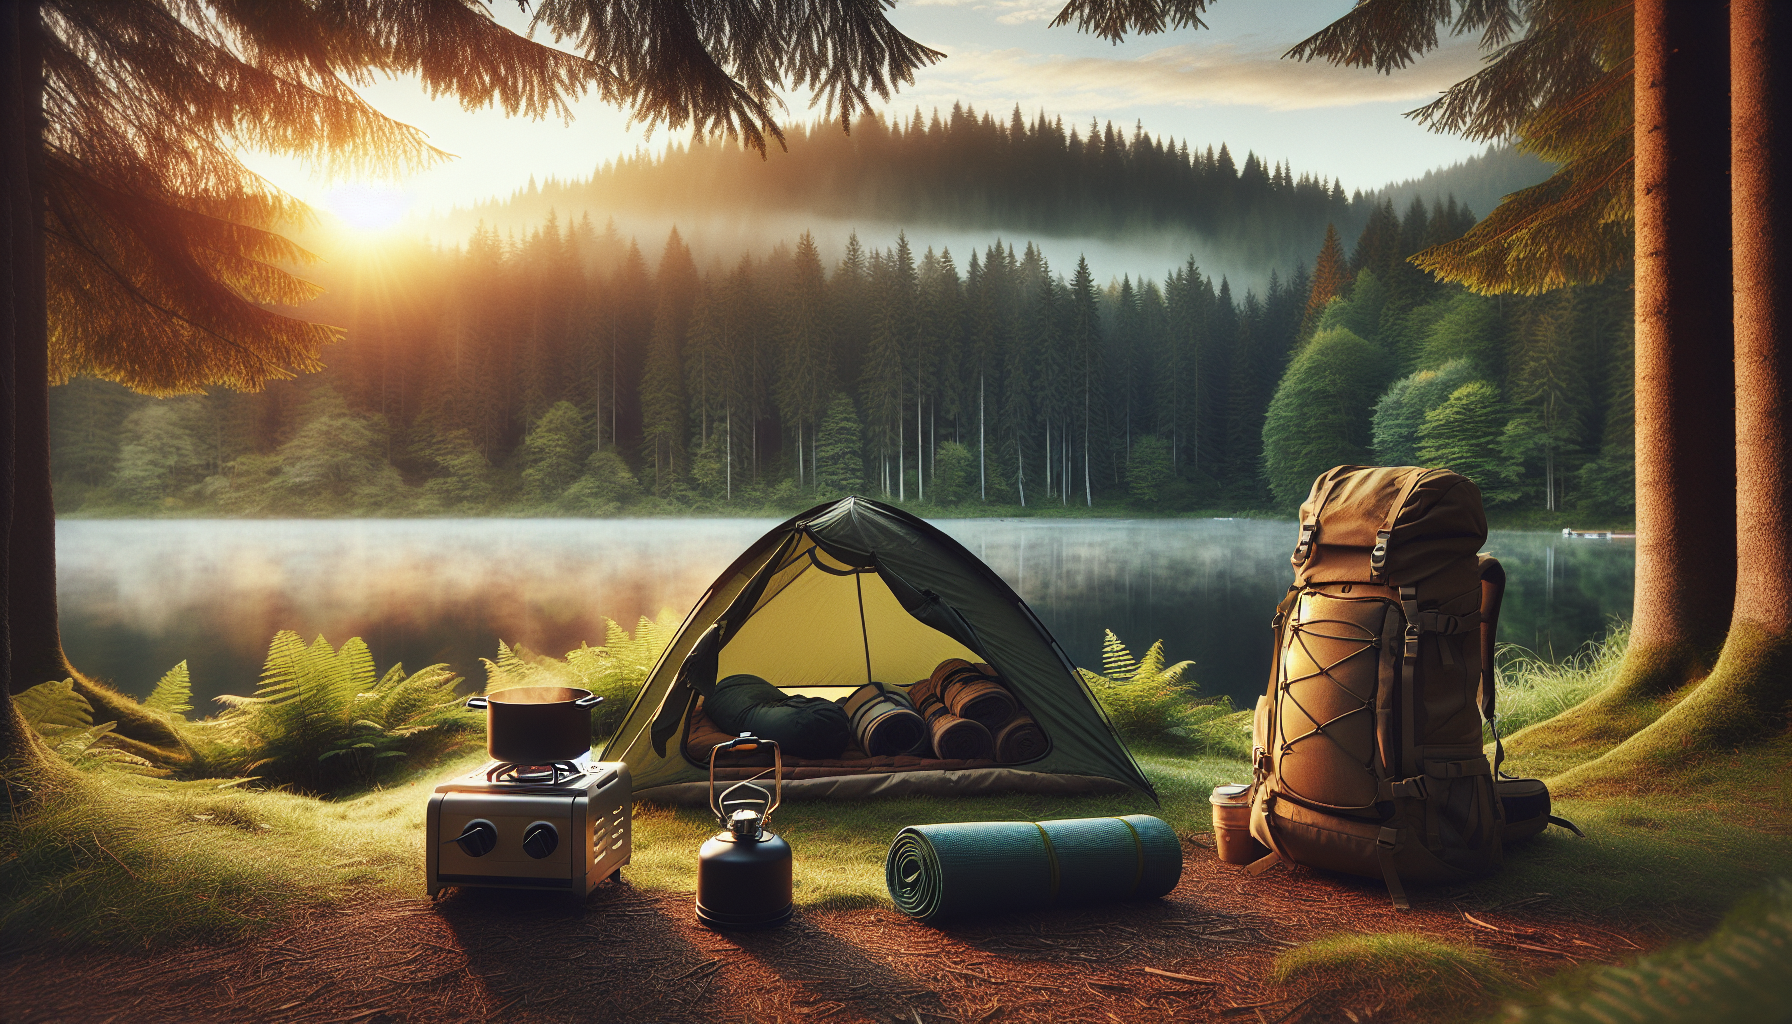 Most Popular Camping Gear Brands